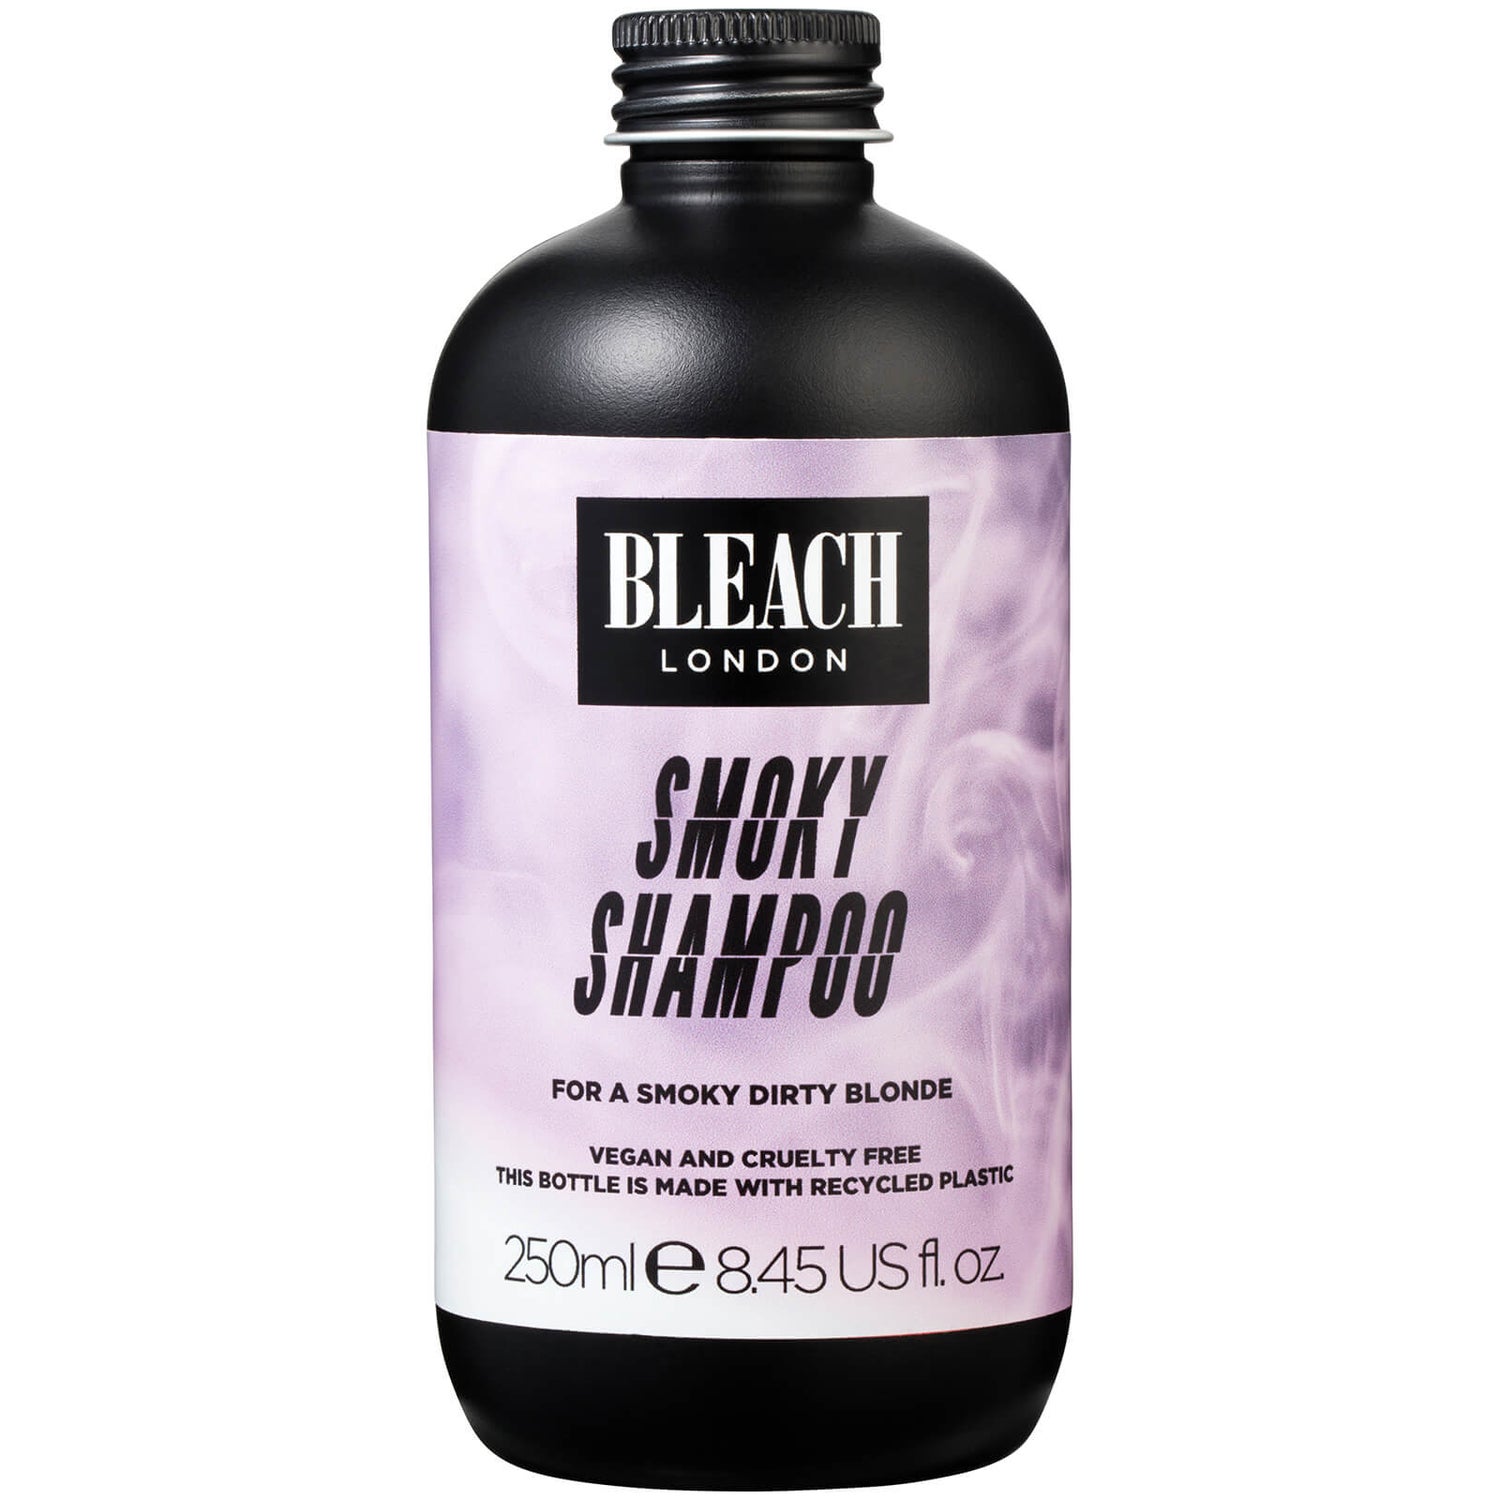 BLEACH LONDON Smokey Shampoo 250ml